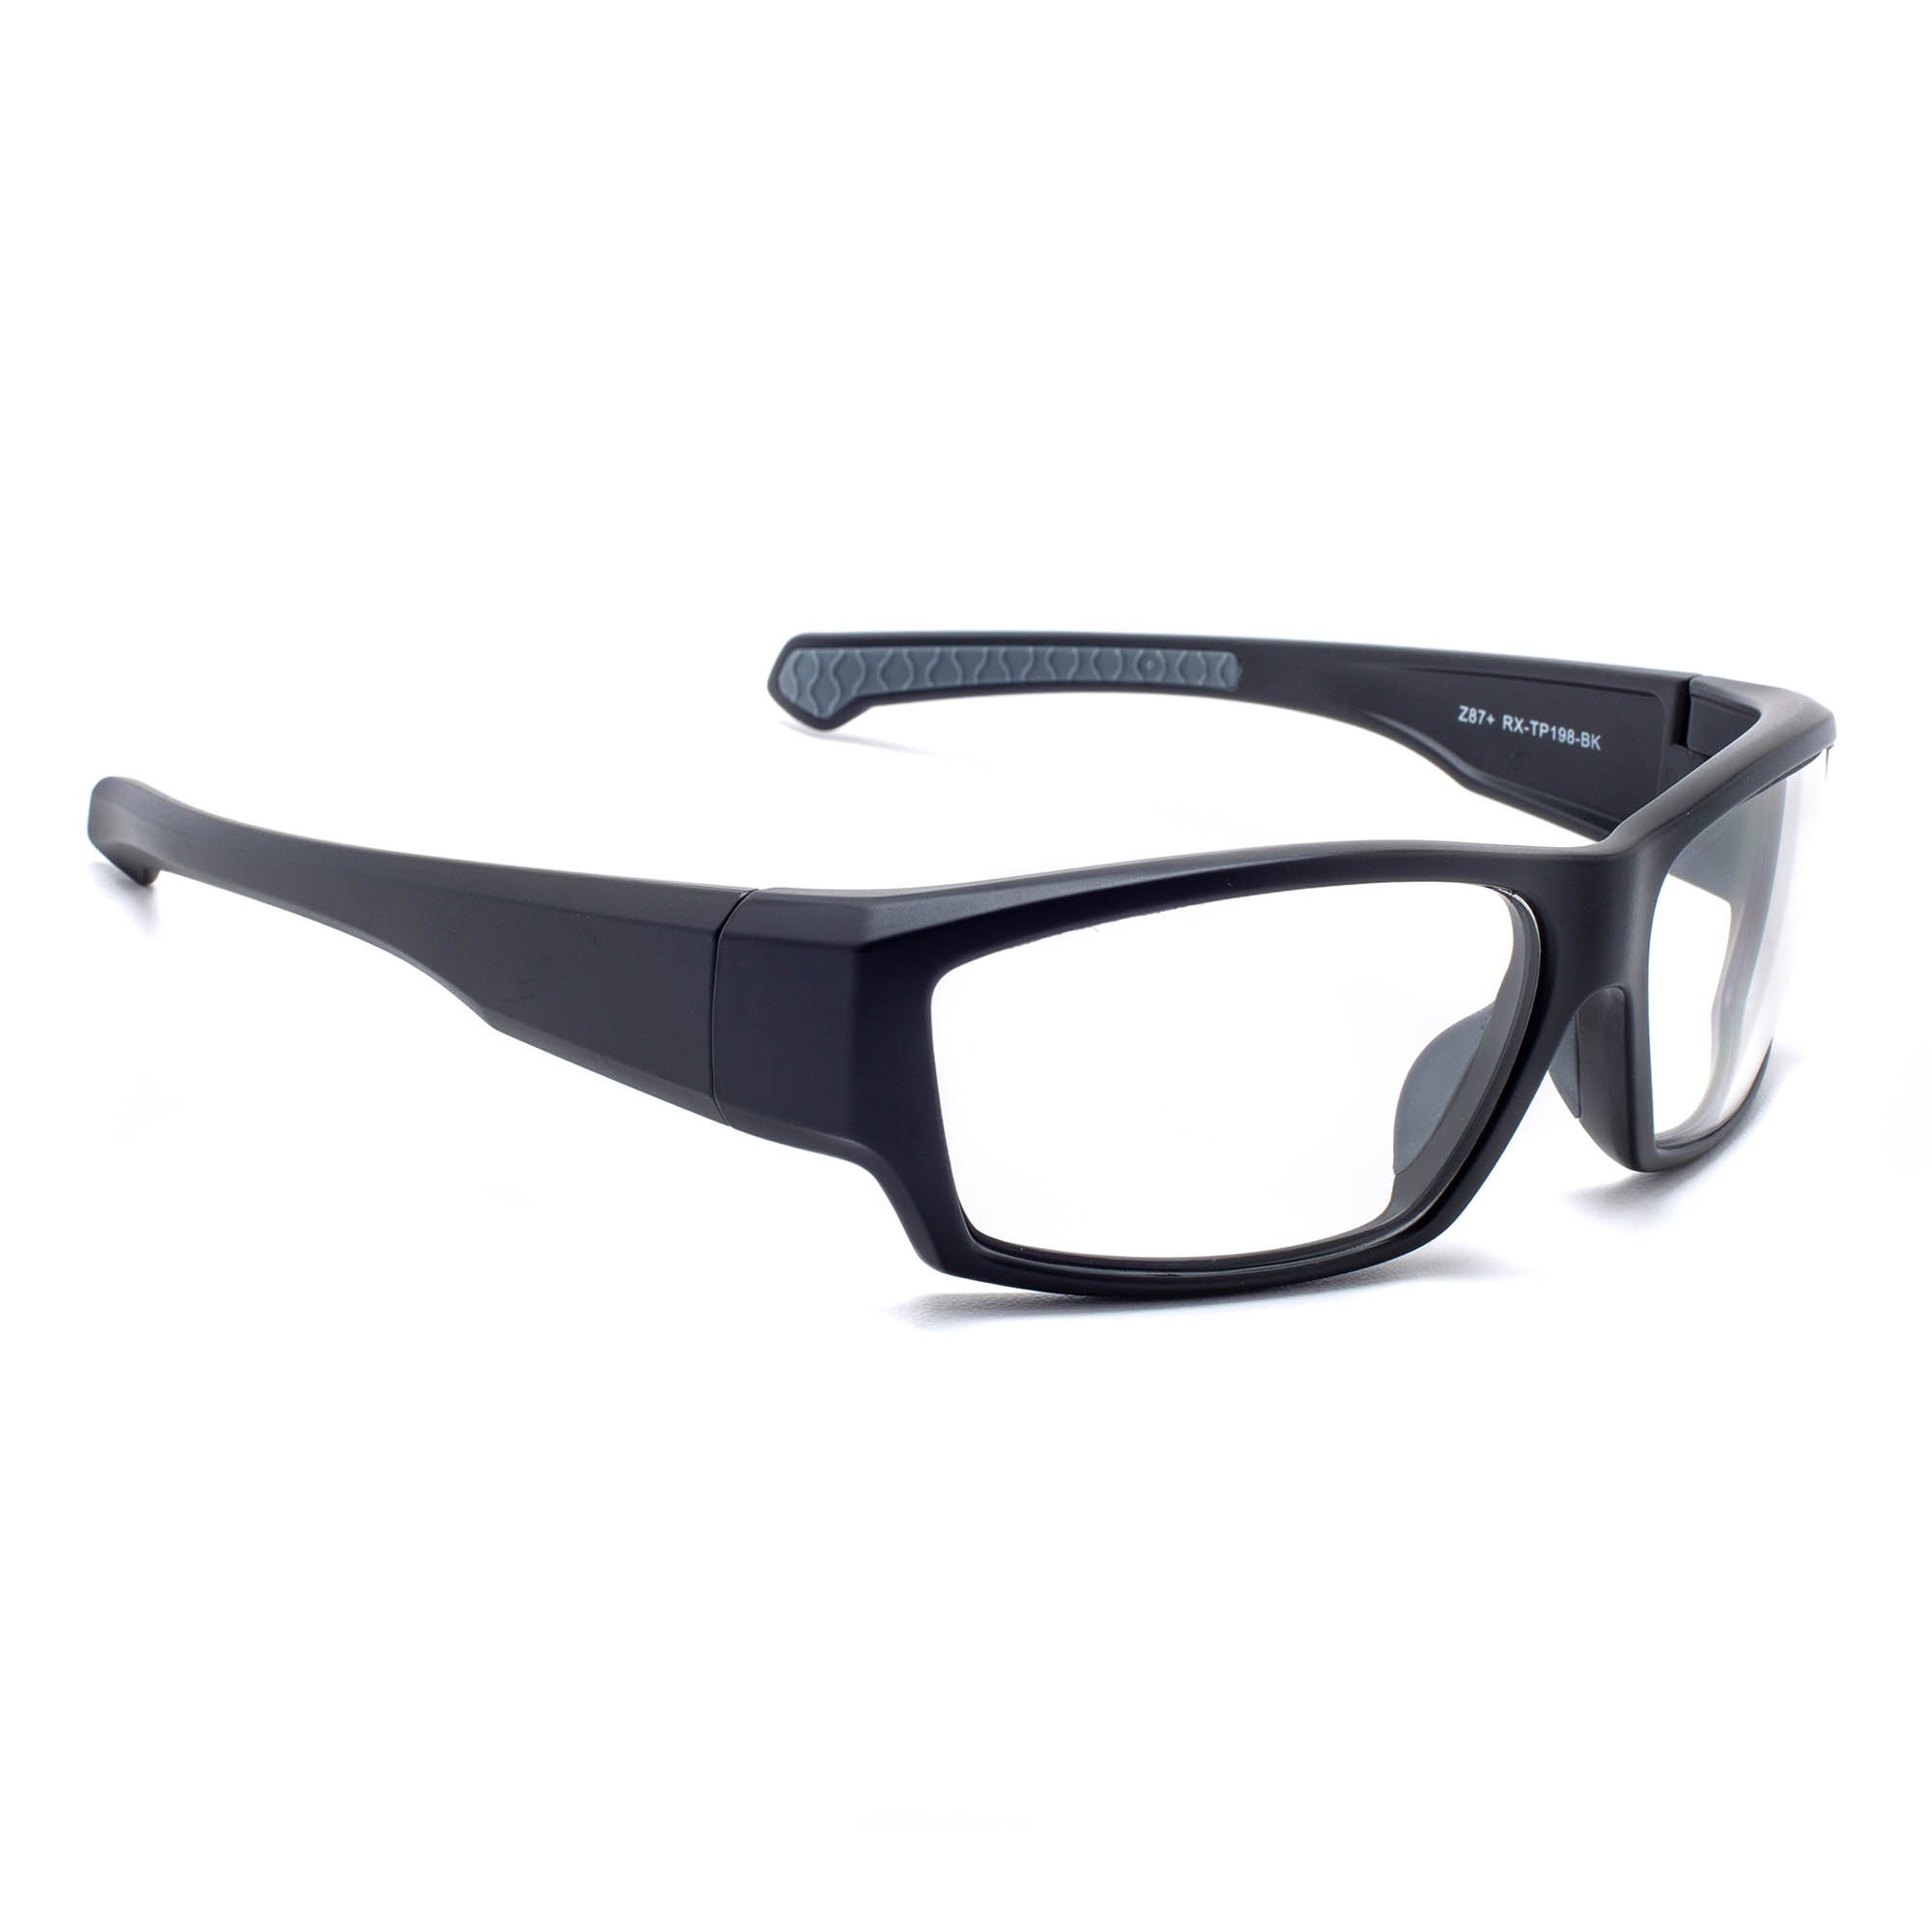 https://www.universalmedicalinc.com/media/catalog/product/cache/30001a70cc972b6c5336337d1270ded8/r/g/rg-tp198-bk_model-tp198-radiation-glasses-black.jpg